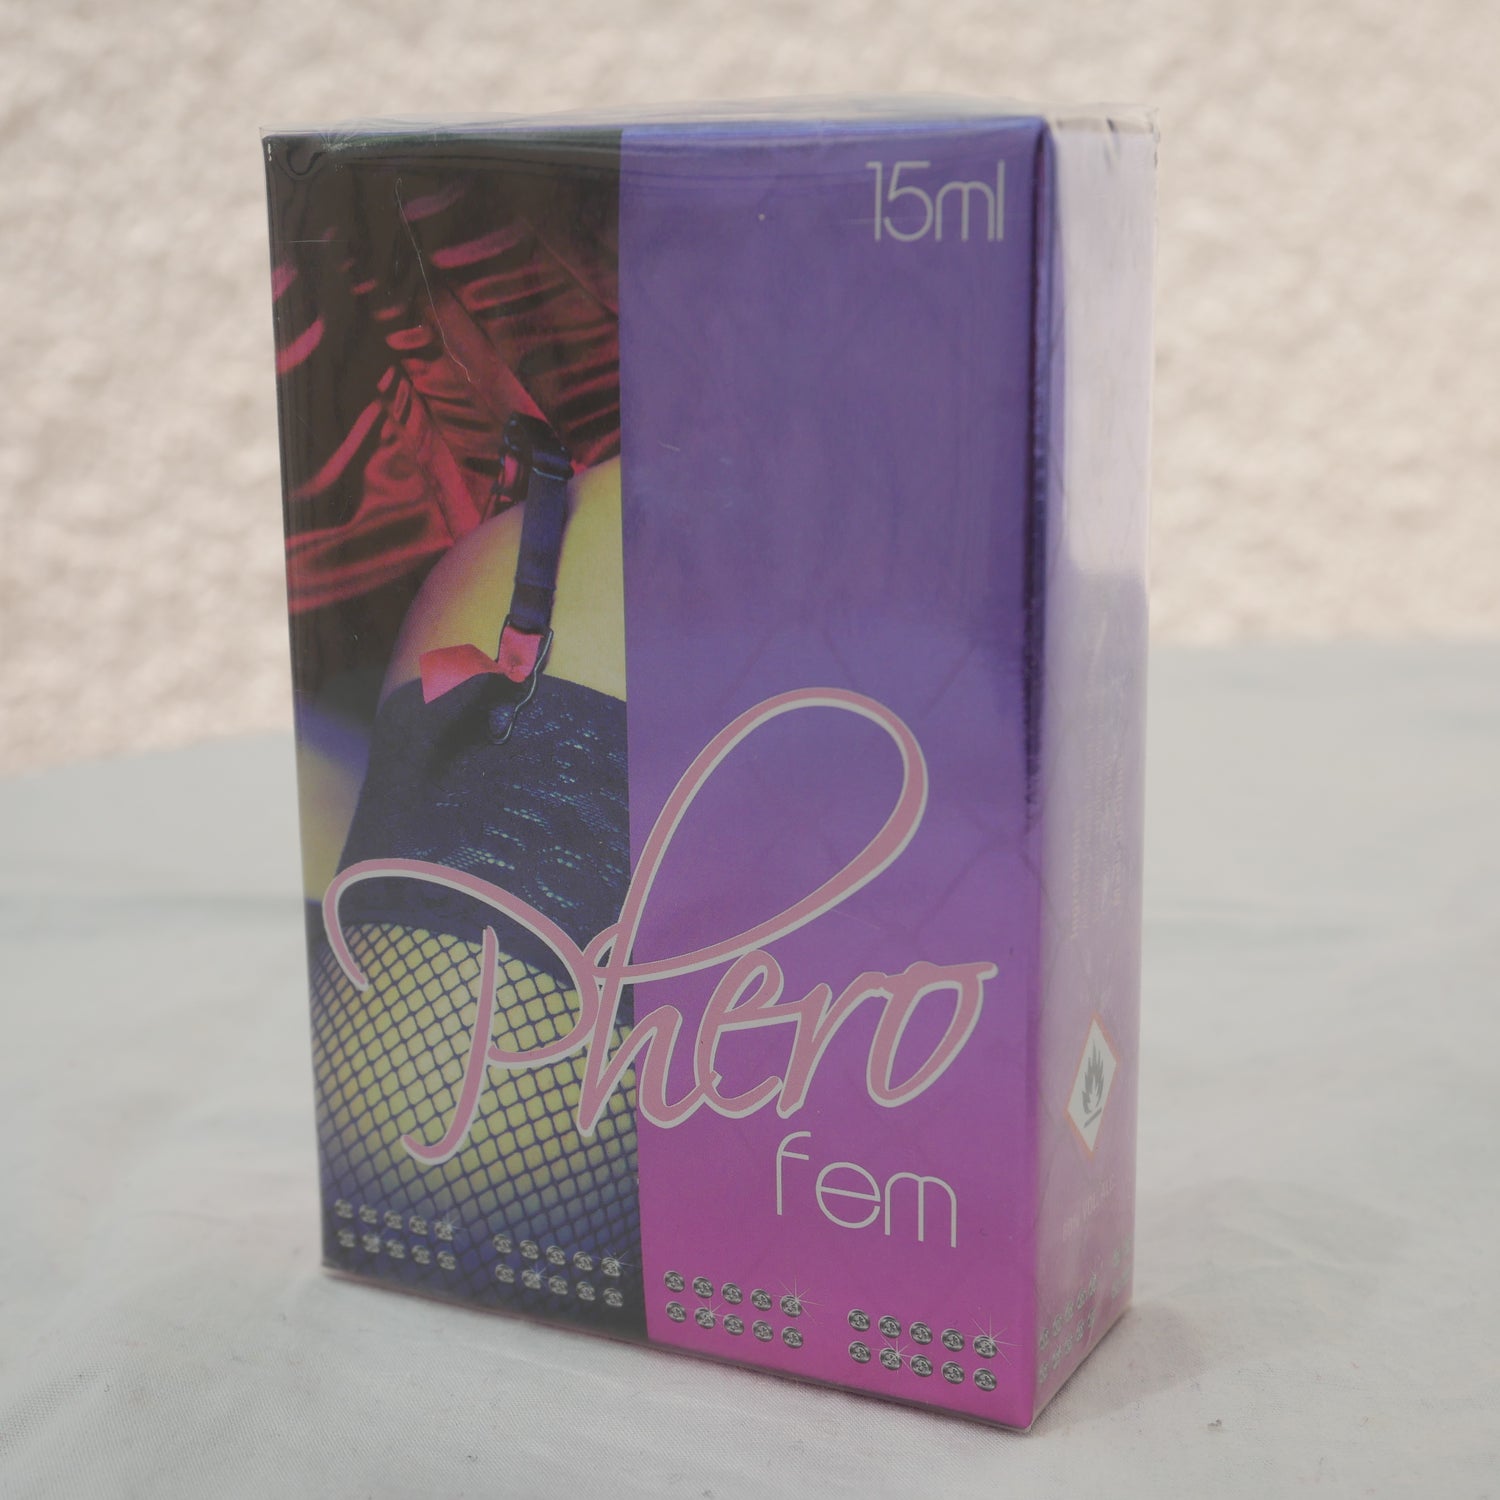 Perfume for WOMEN